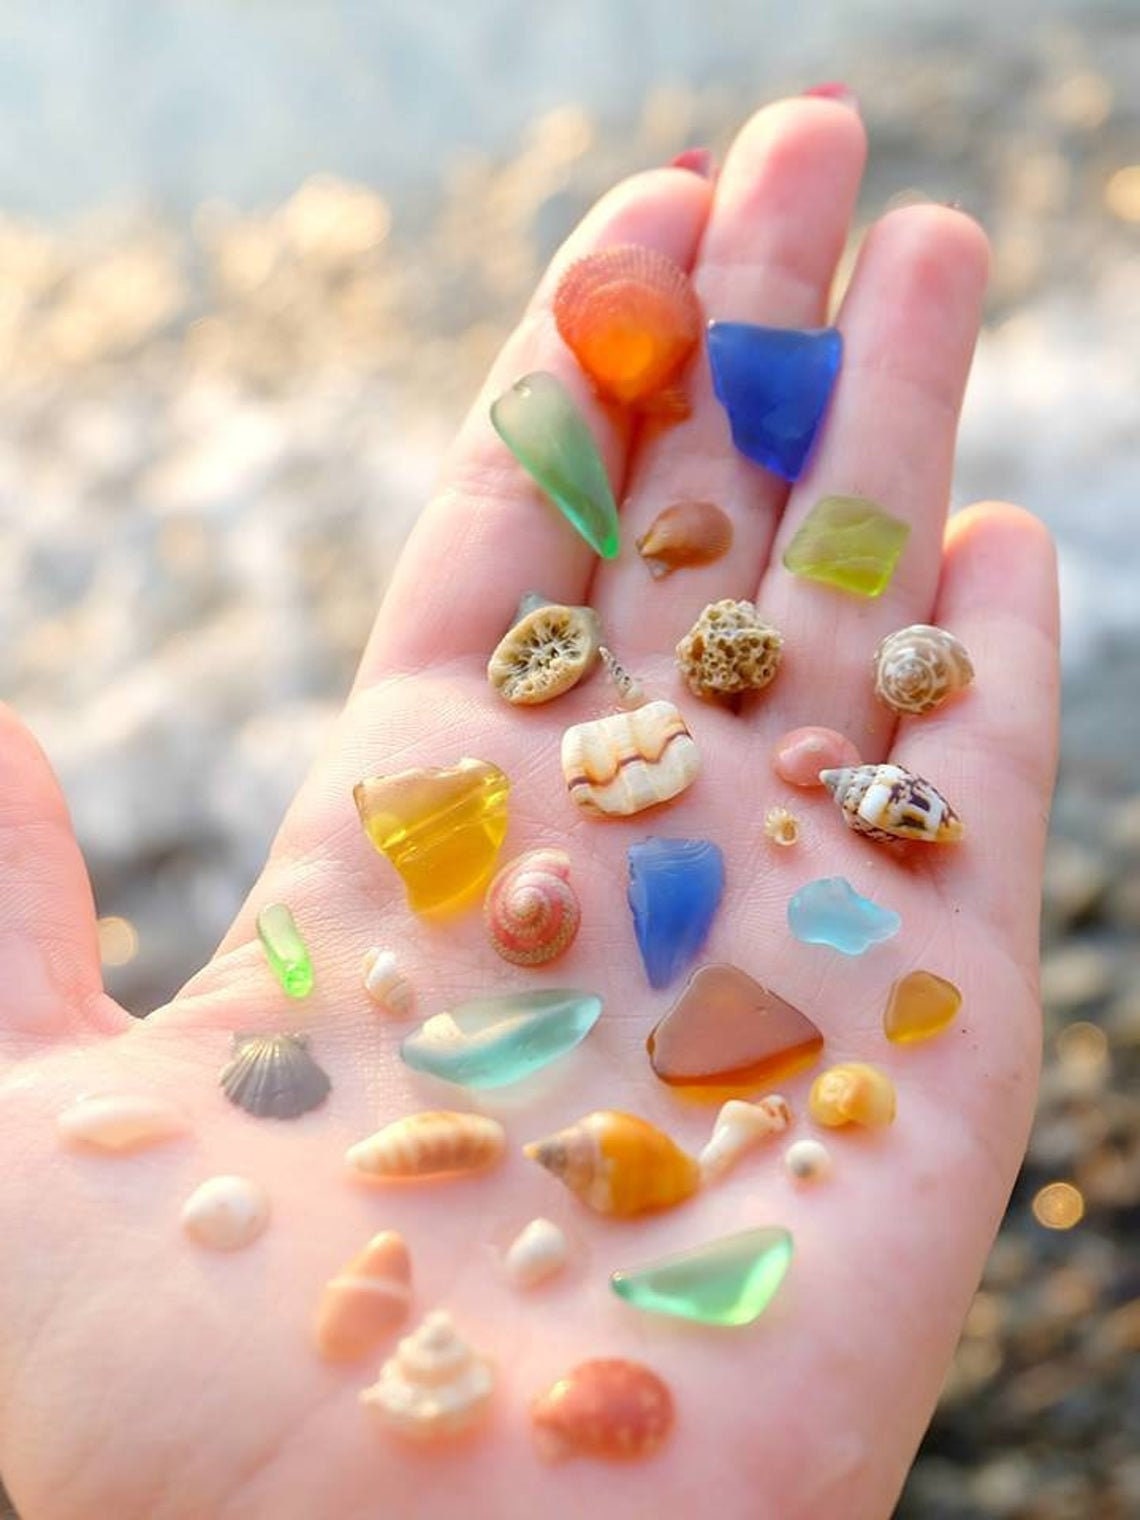 Genuine Sea Glass Beach Treasure Beach Glass Sea Pottery Beach Decor Beach  Stones Shell Bulk Mermaid Treasure Box Sea Ceramic Seaglass -  Norway